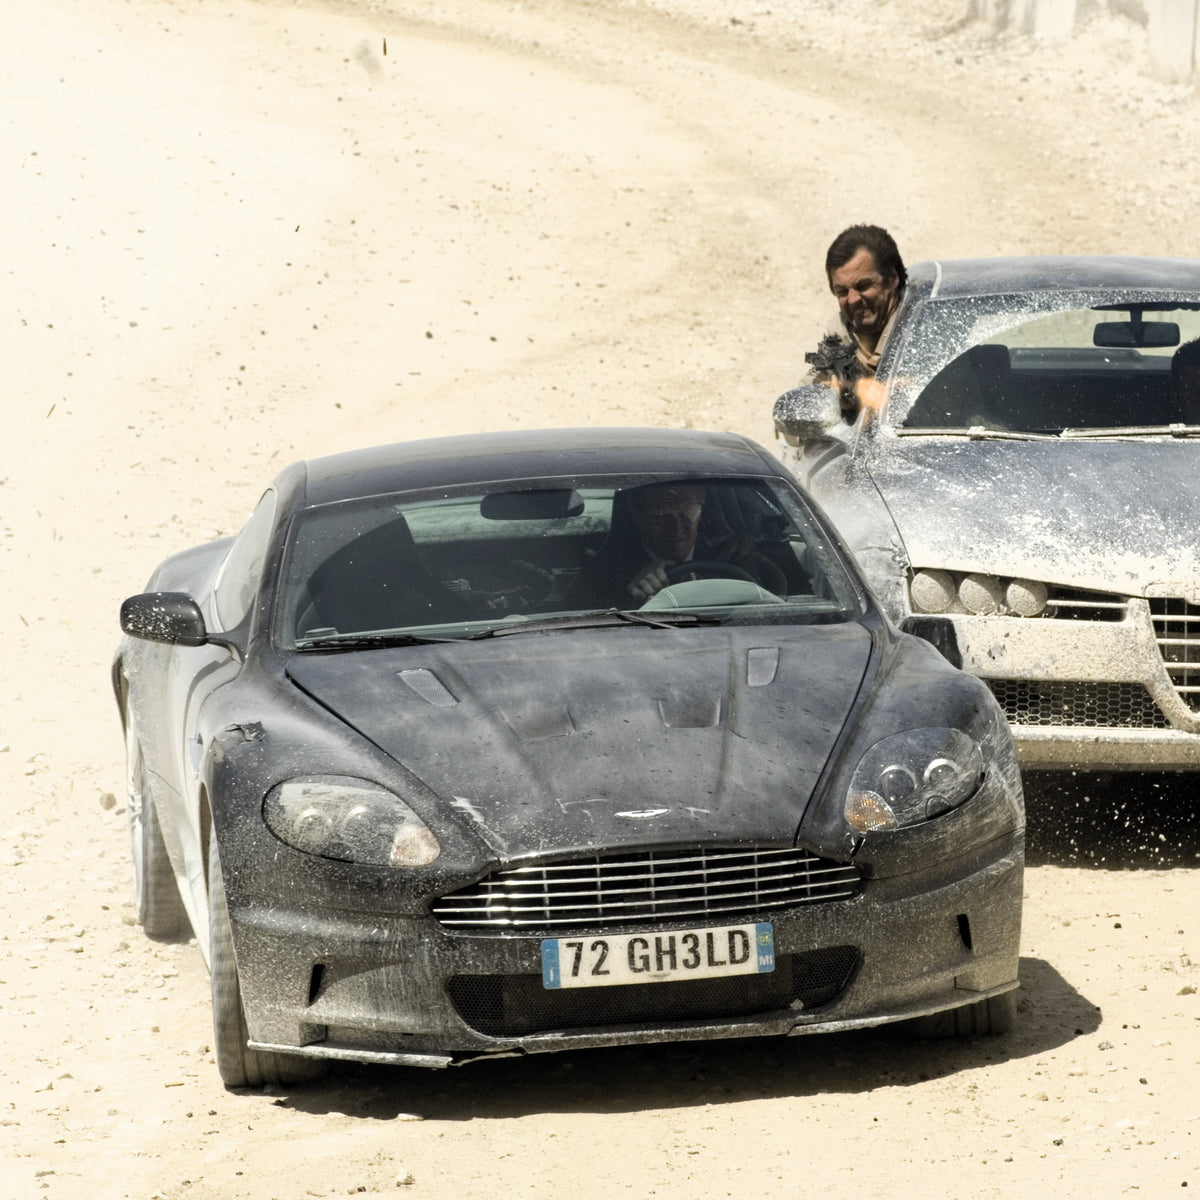 James Bond Damaged Aston Martin DBS Model Car - Quantum Of Solace Edition - By Corgi